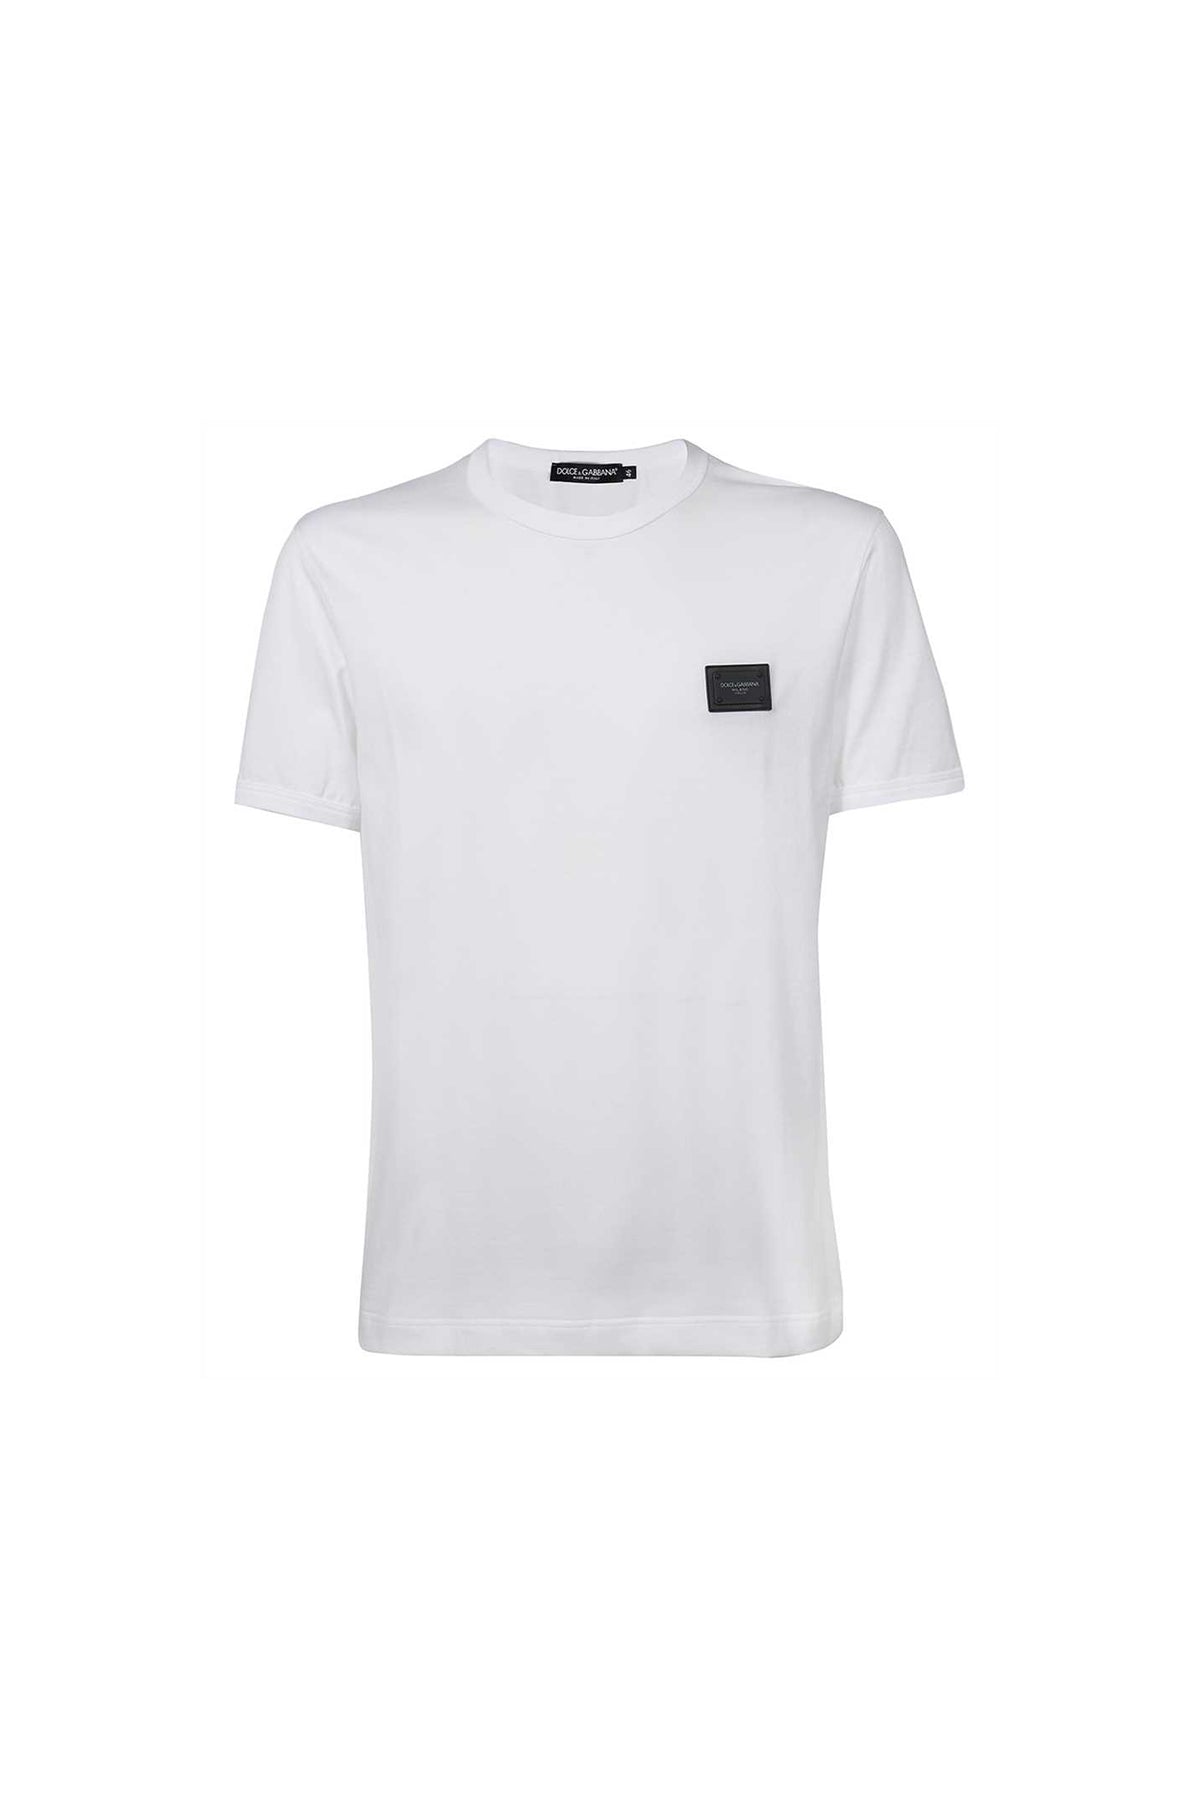 Dolce & Gabbana White Cotton Black Plate T-Shirt